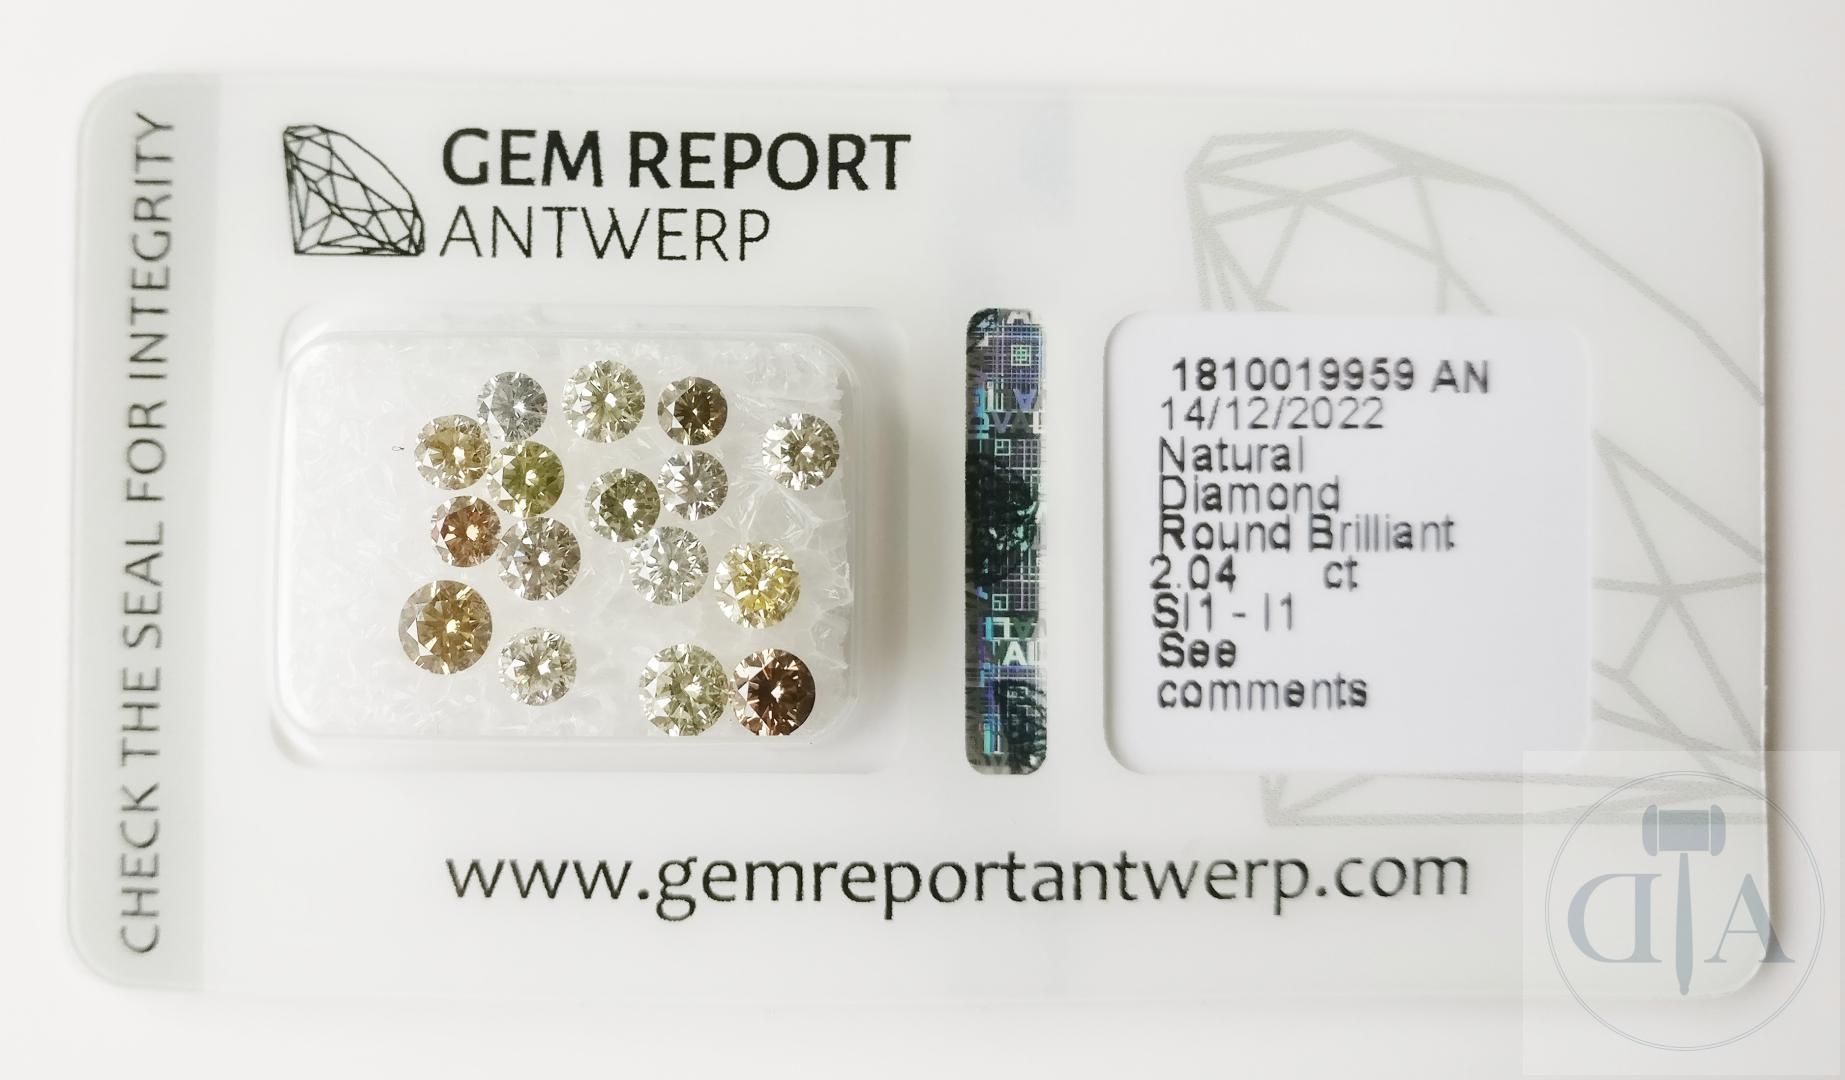 Null Diamant 2.04ct certifié GRA

- Certificat GRA n° 1810019959AN 
- Forme : Br&hellip;